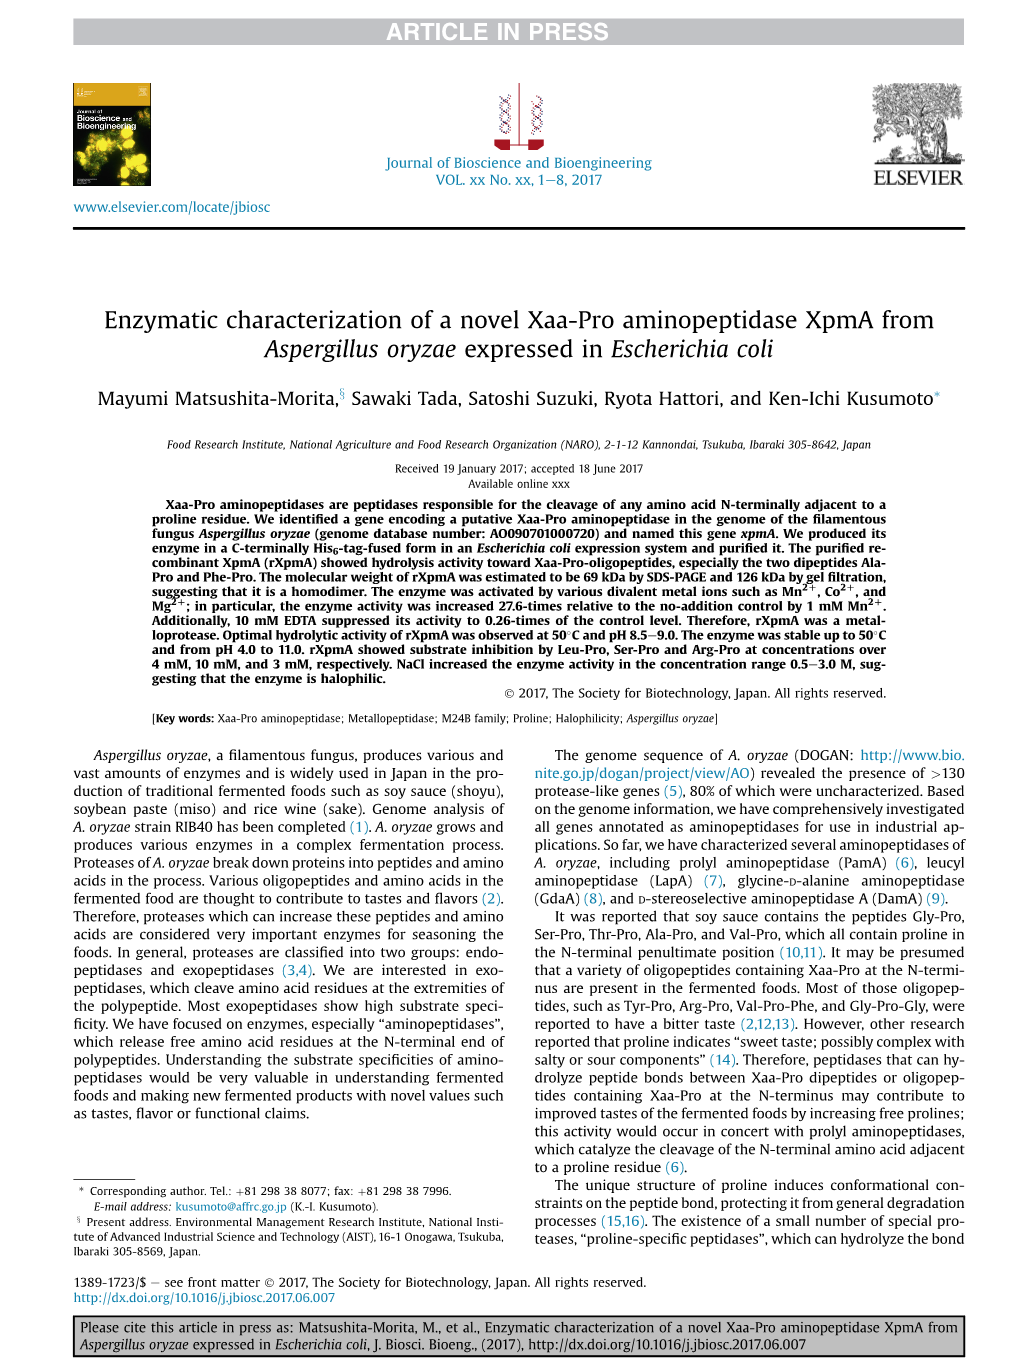 Enzymatic Characterization of a Novel Xaa-Pro Aminopeptidase Xpma from Aspergillus Oryzae Expressed in Escherichia Coli